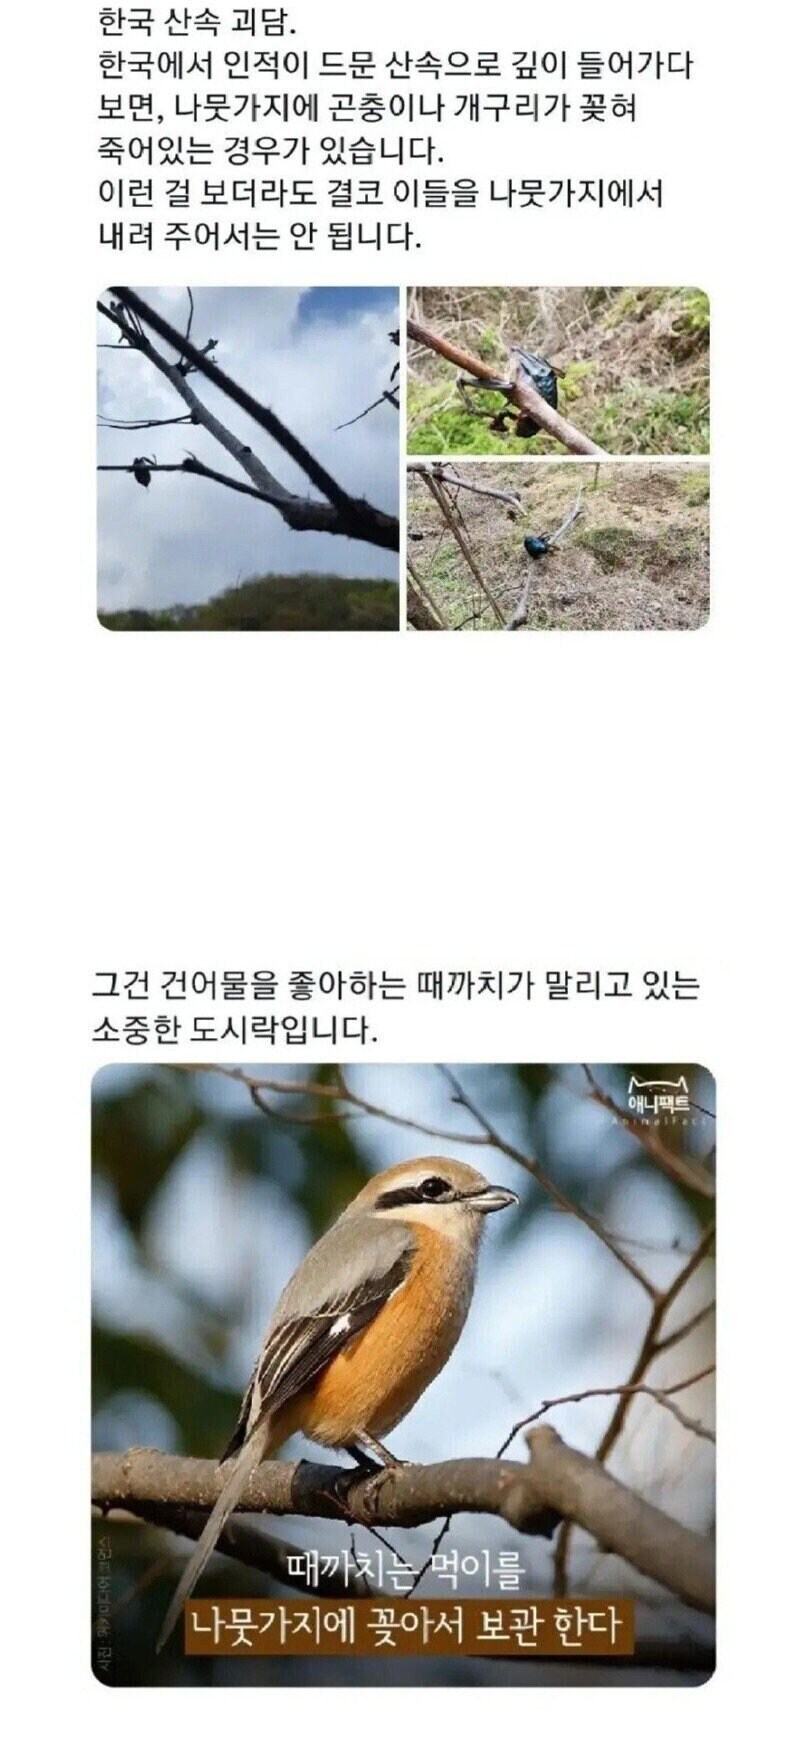 nokbeon.net-산속에서 나무에 꽂힌 동물시체를 조심해야하는 이유-1번 이미지